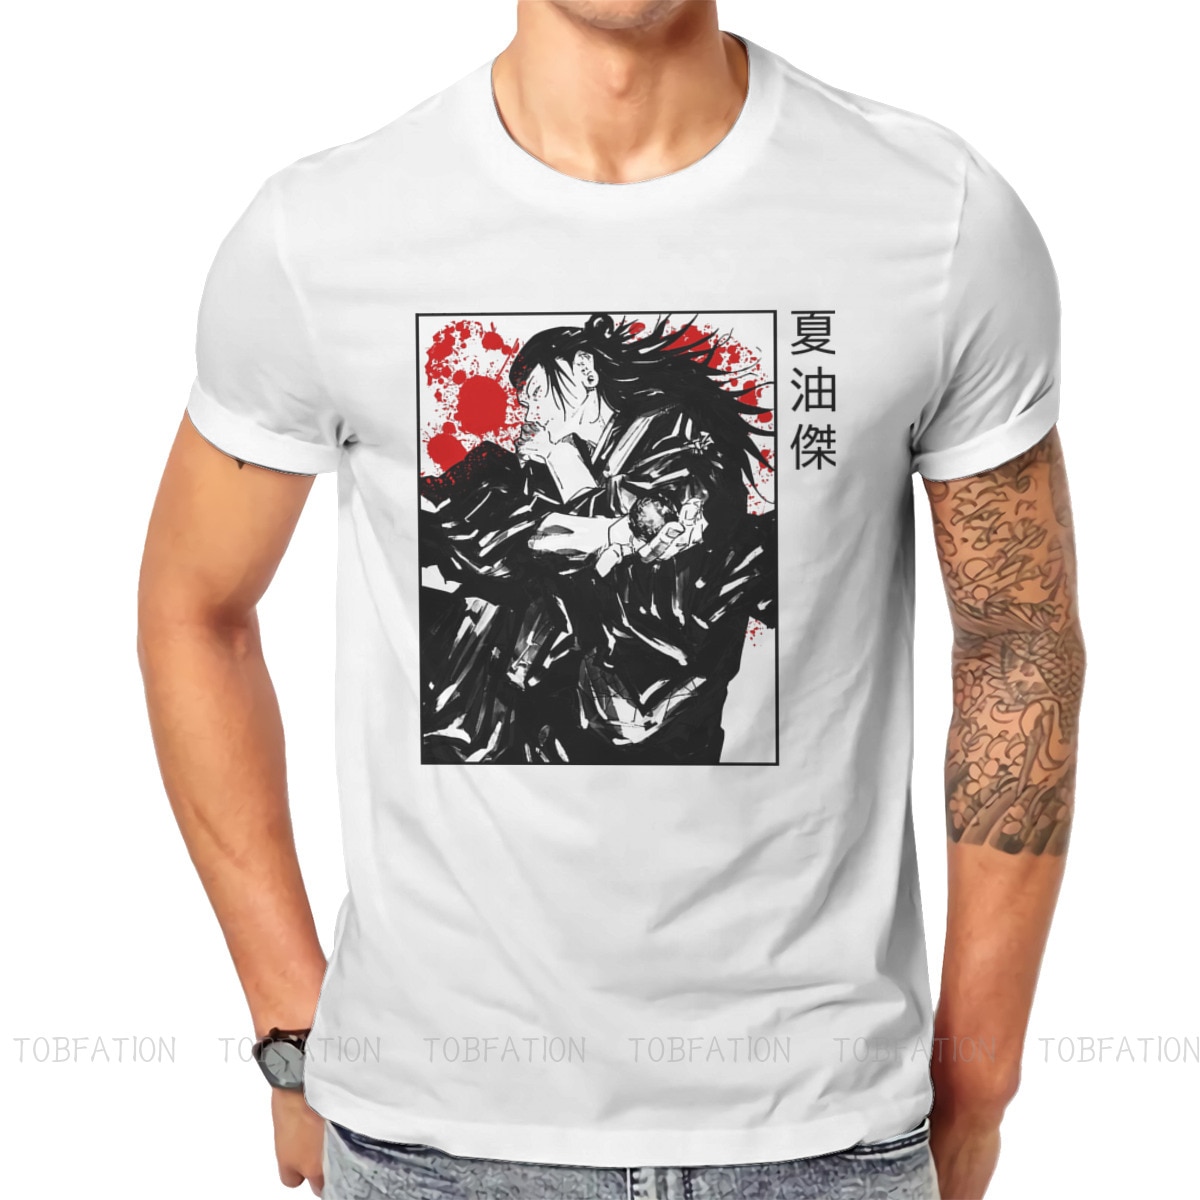 Genos T-Shirt Anime Manga Villain One Punch-Man Graphic Tee S To 5XL | eBay